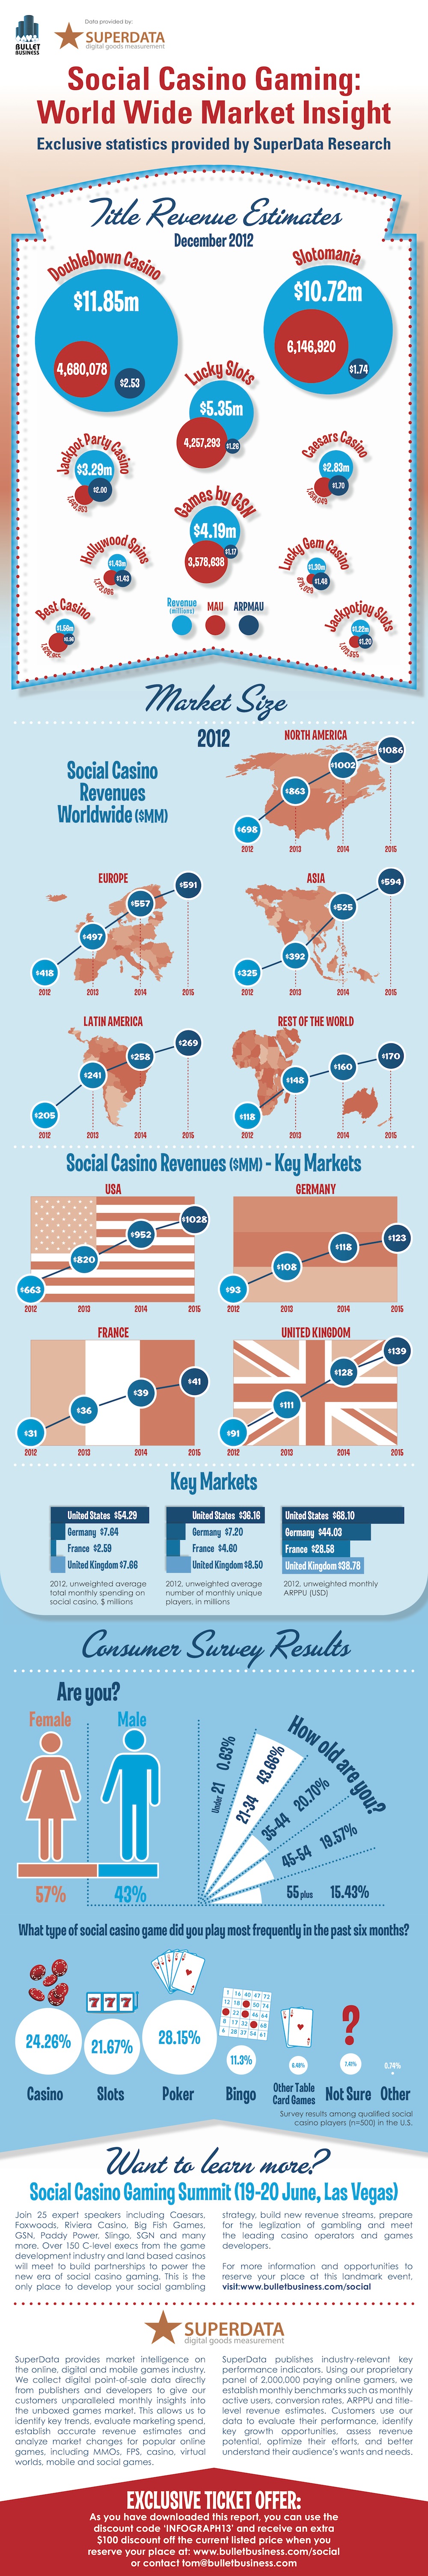 Social Casino Infographic, April 2013